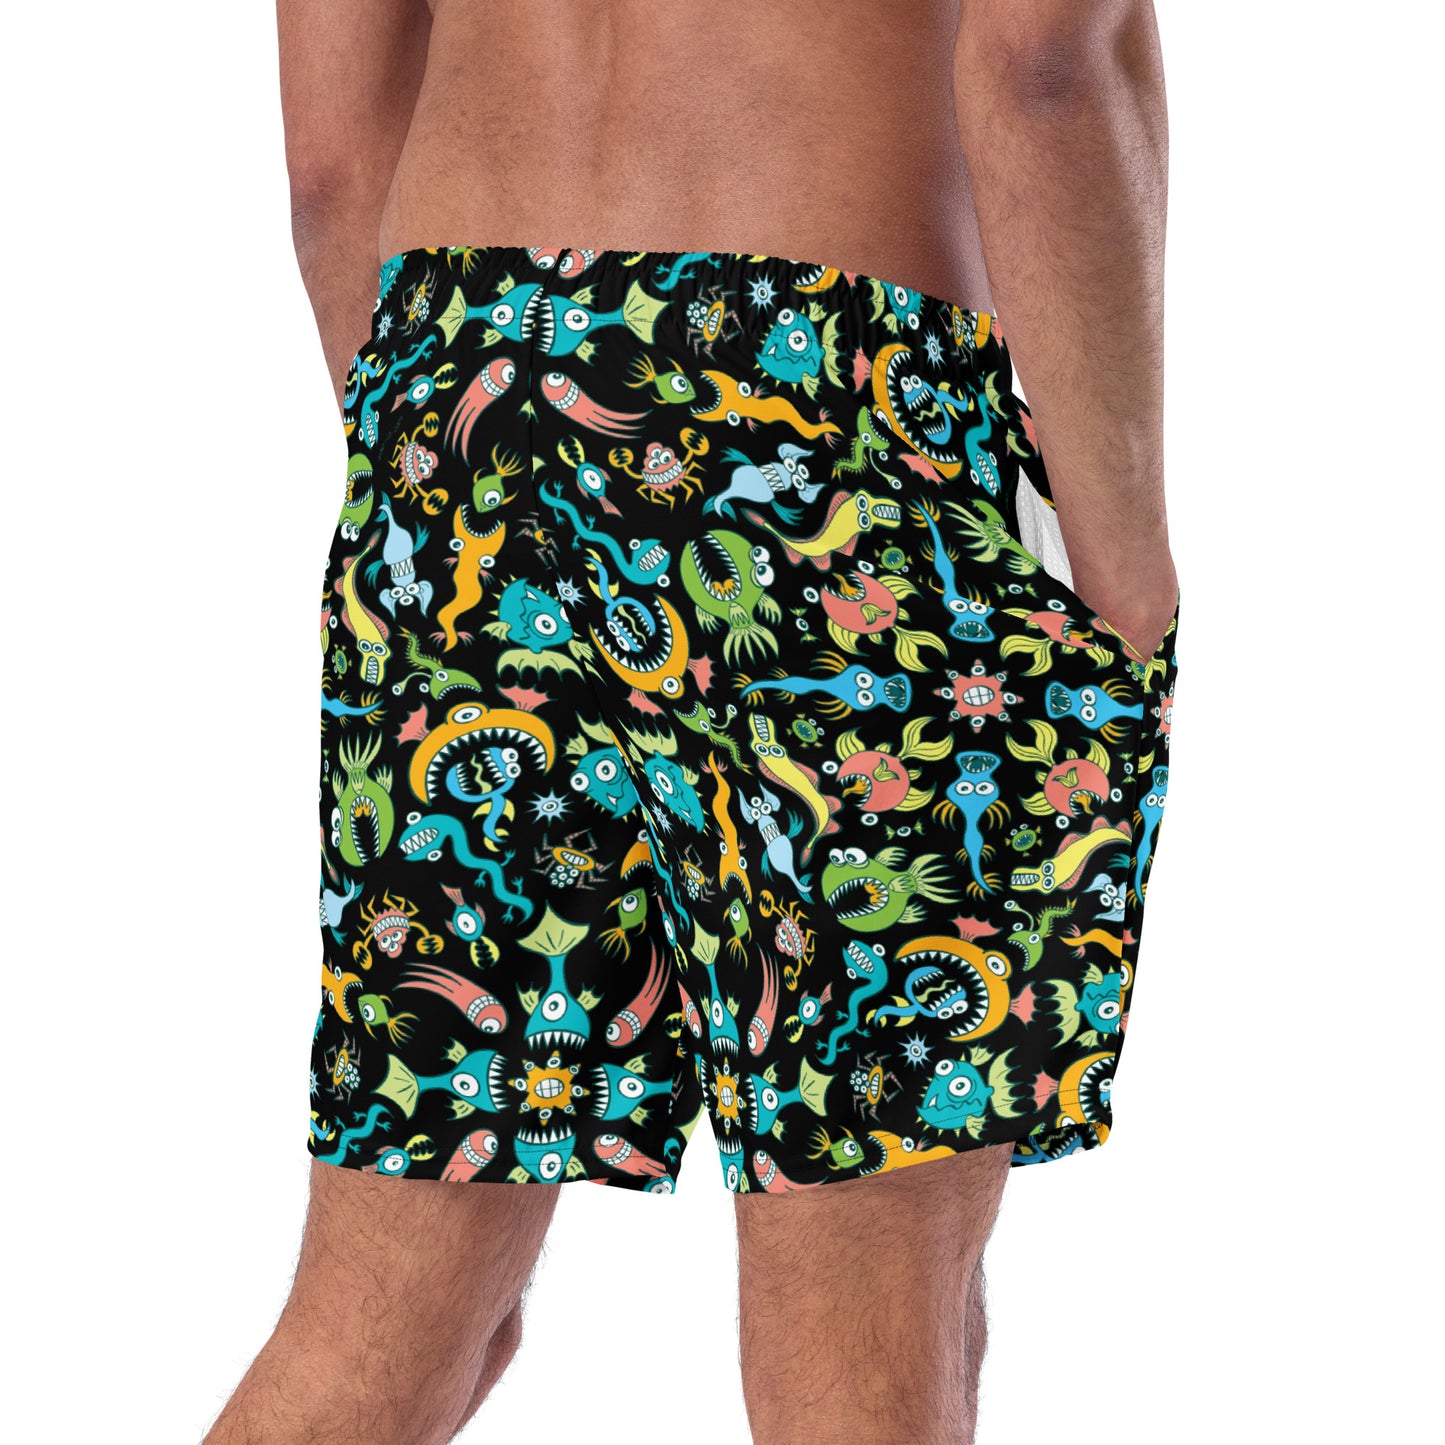 Sea creatures pattern design Men's swim trunks. Back view